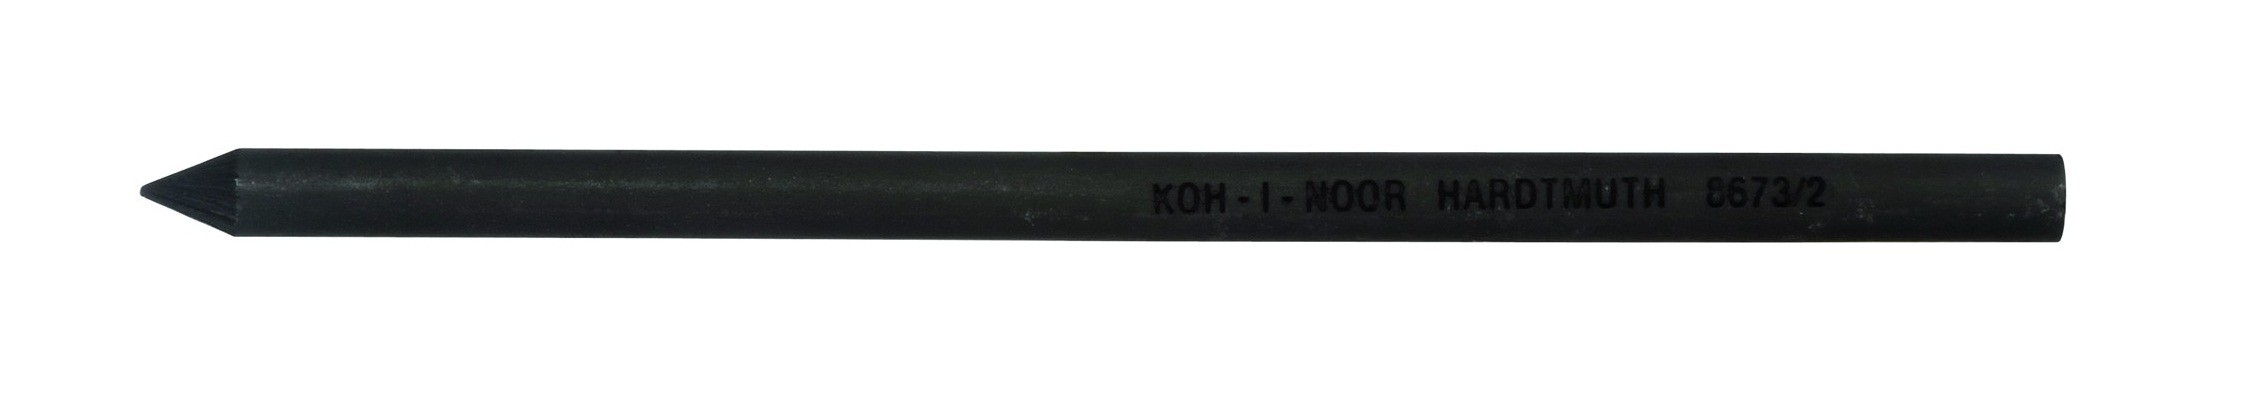 Carbune artificial KOH-I-NOOR 3B, 12 buc/set